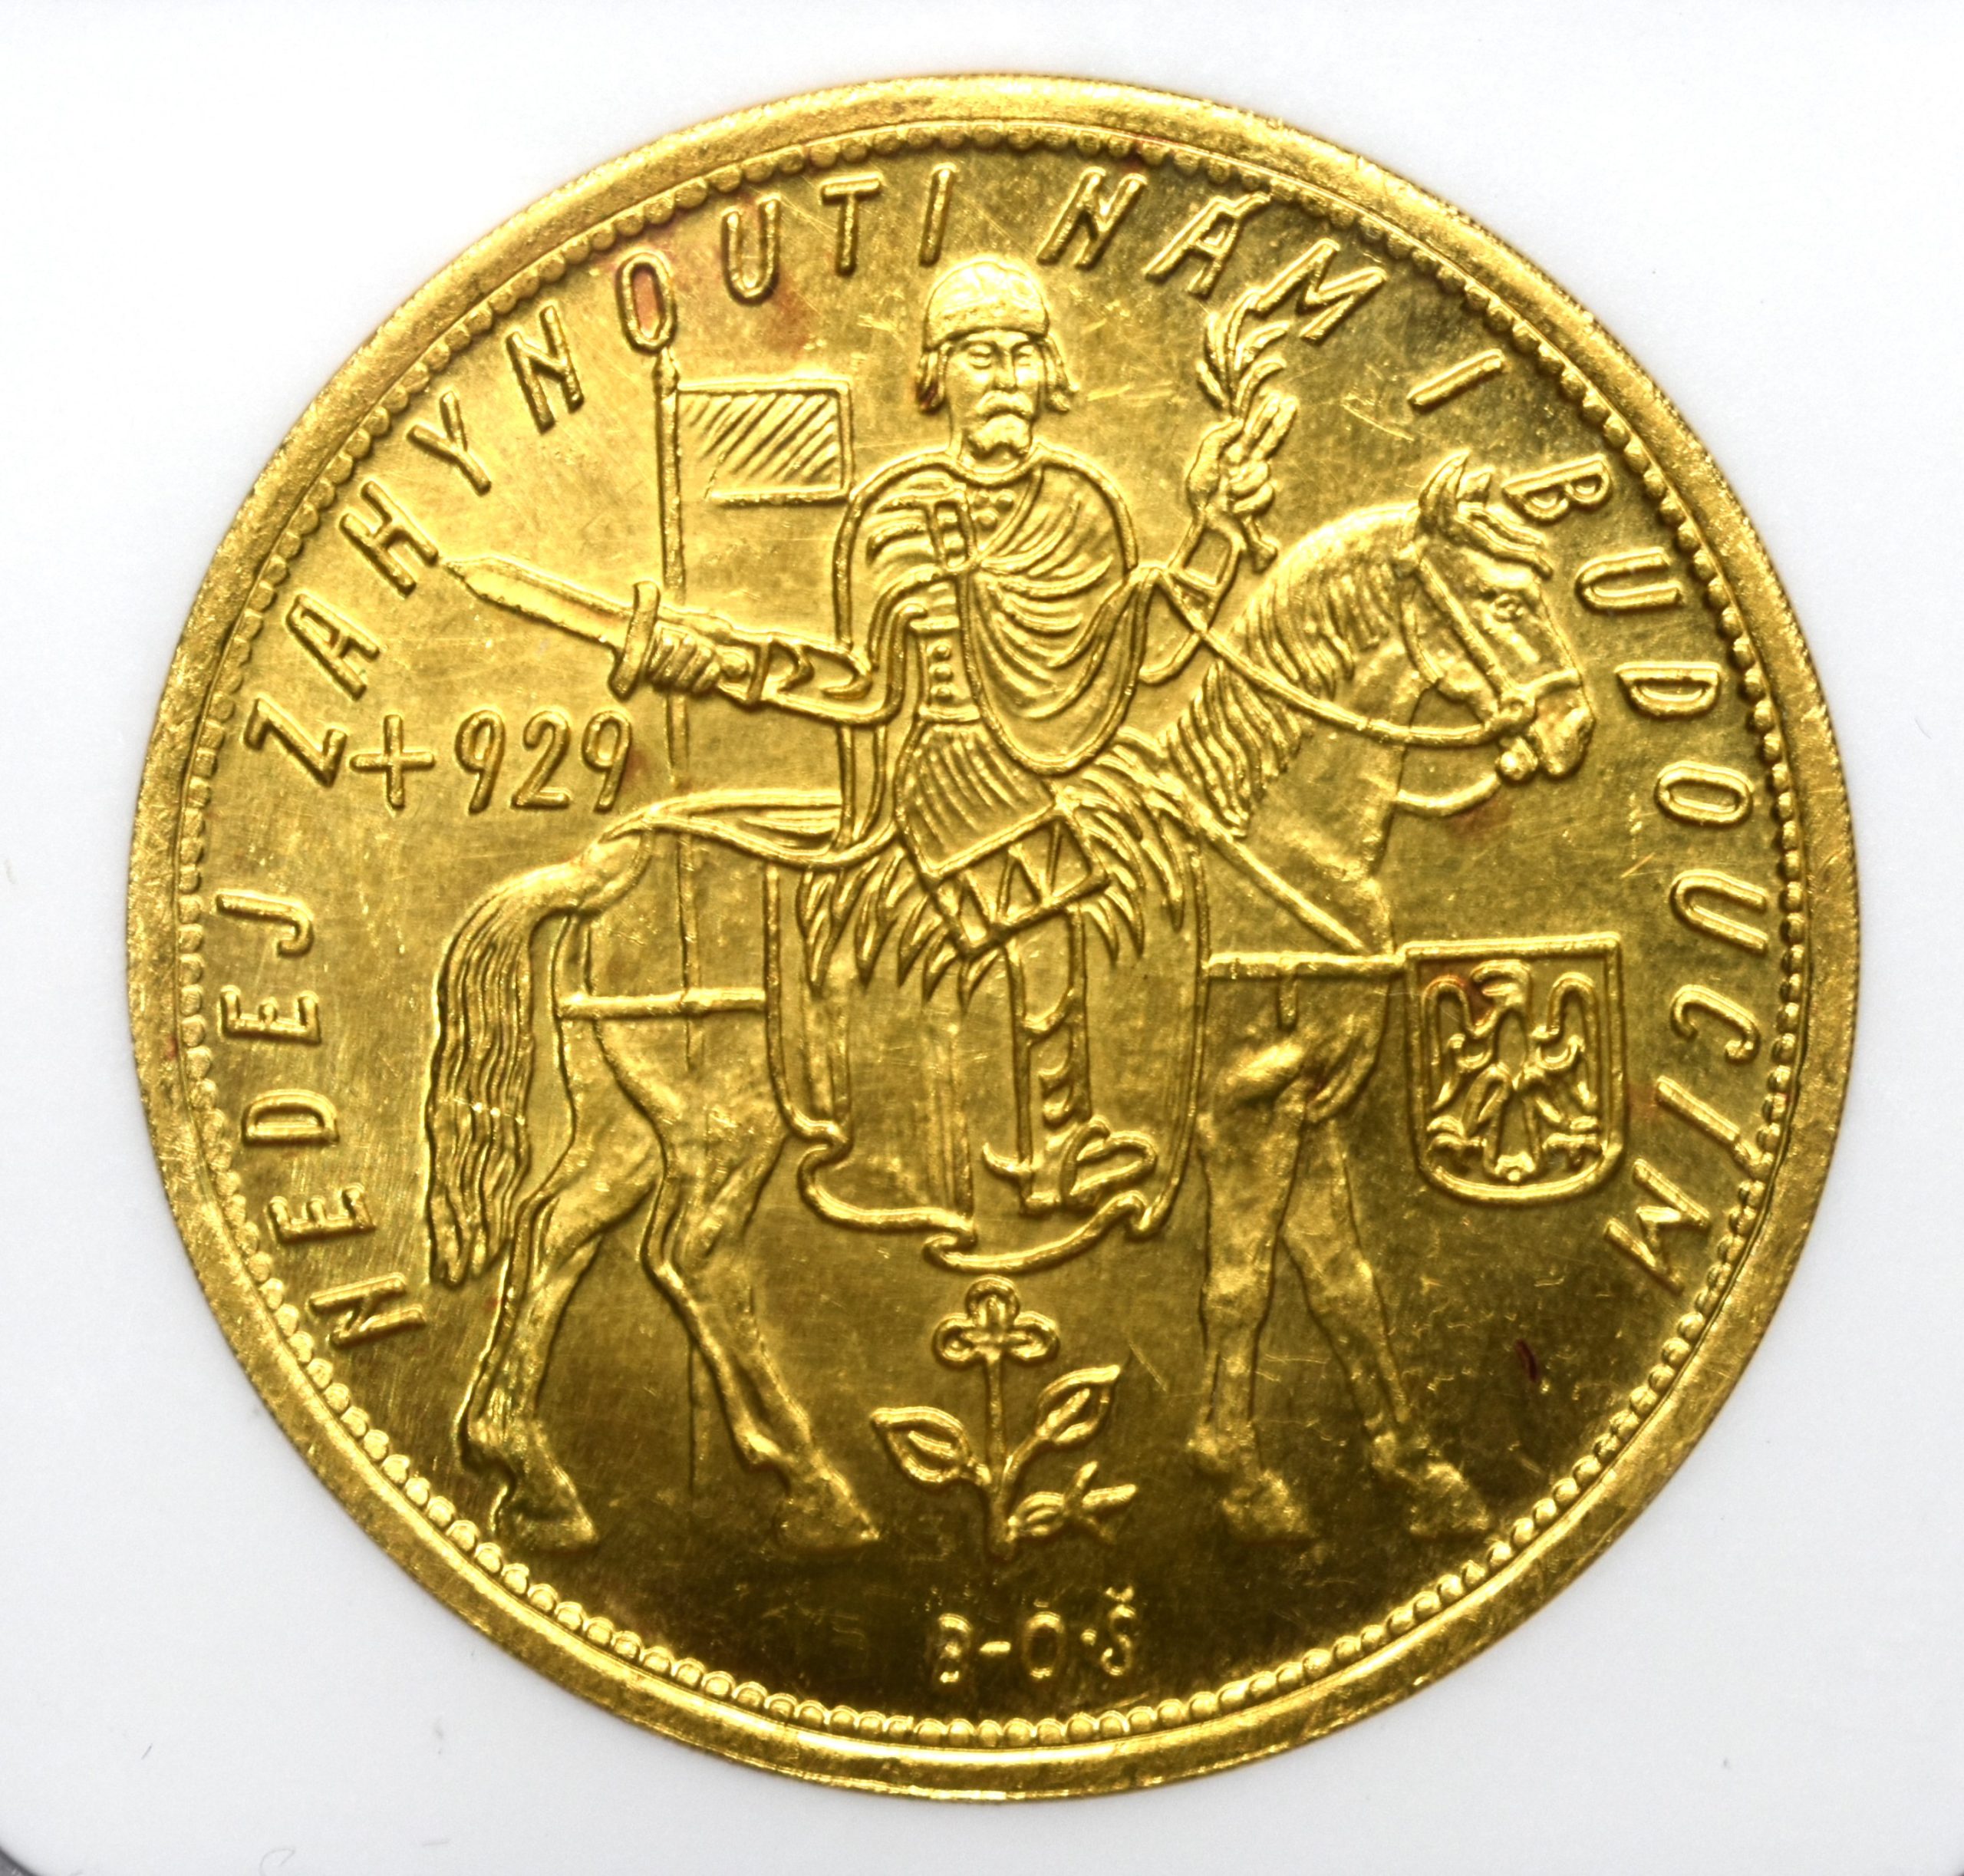 Sold】【再掲載】1934年 チェコスロバキア 10ダカット金貨 MS66 NGC 